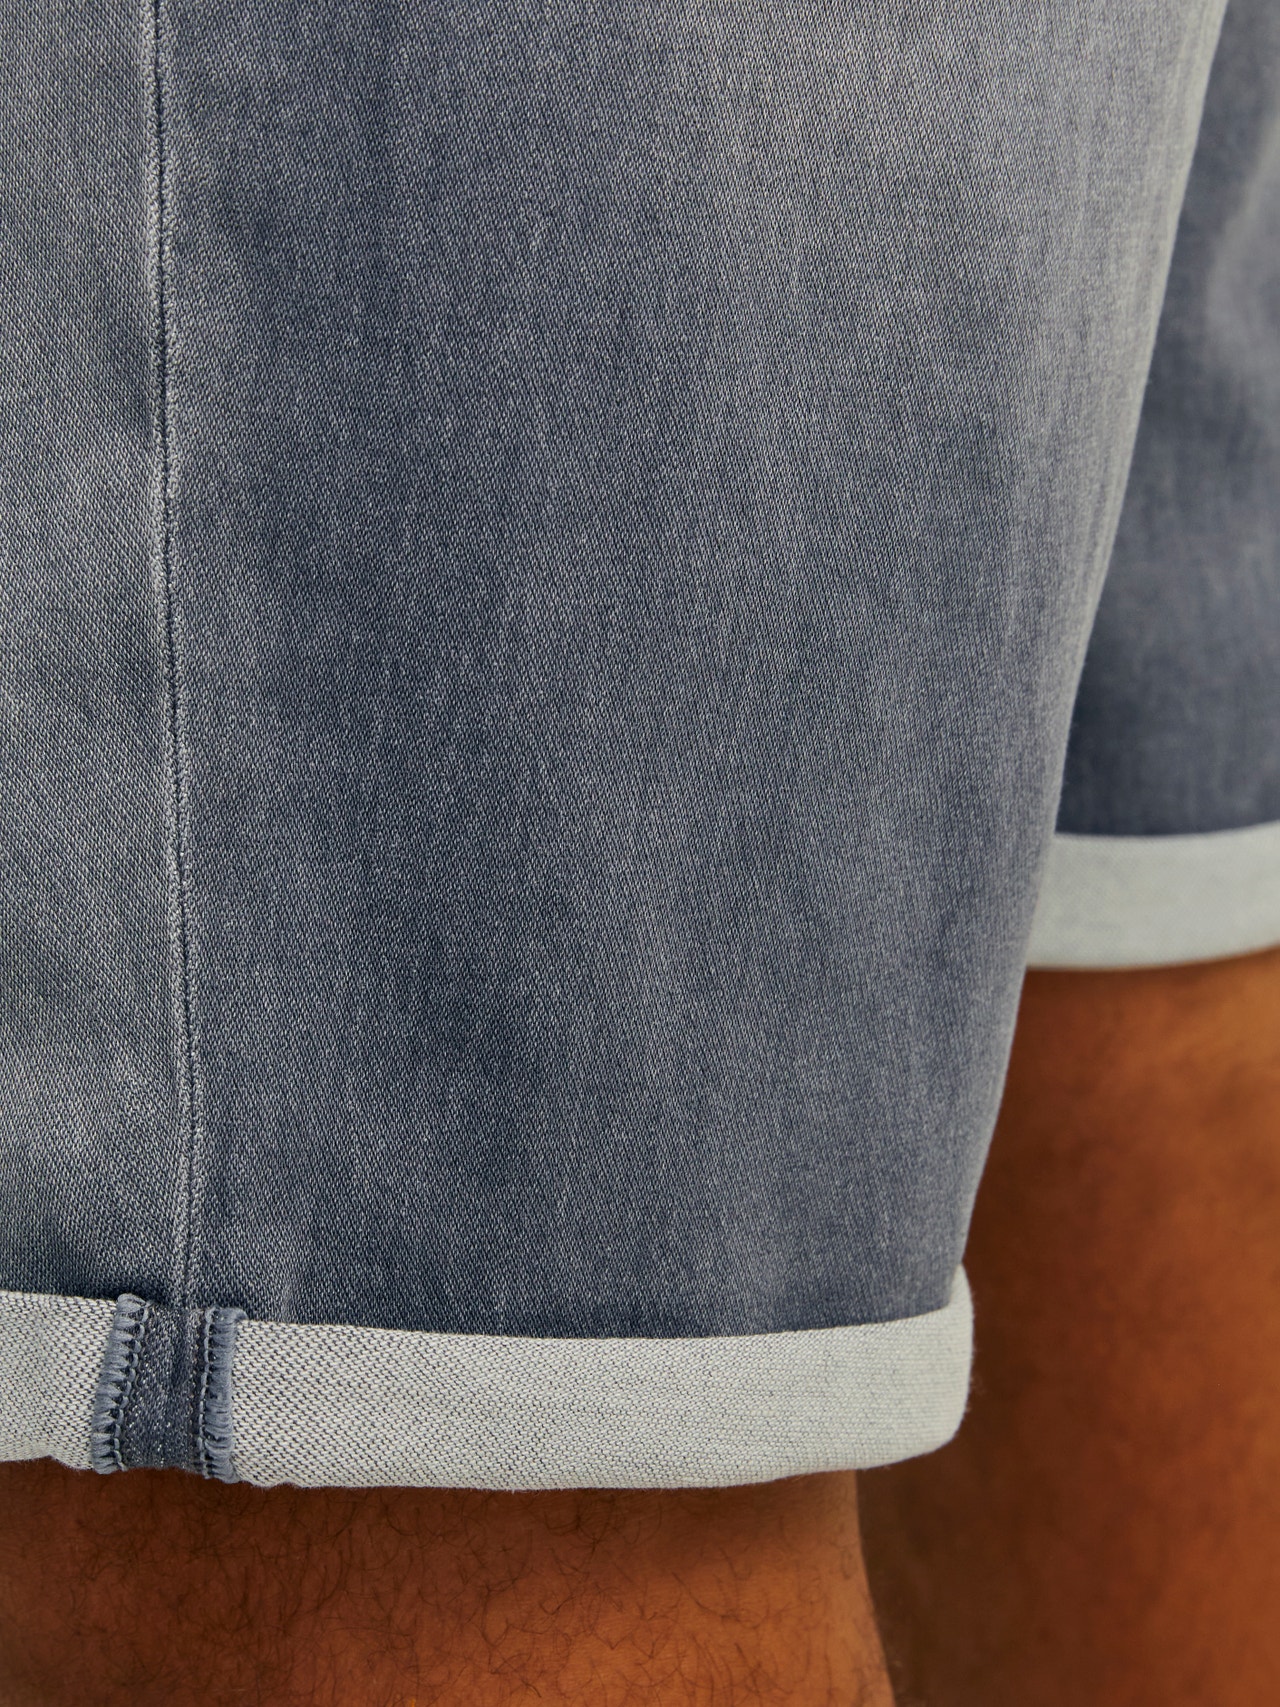 Jack & Jones Plus Size Regular Fit Regular fit shorts -Grey Denim - 12253028